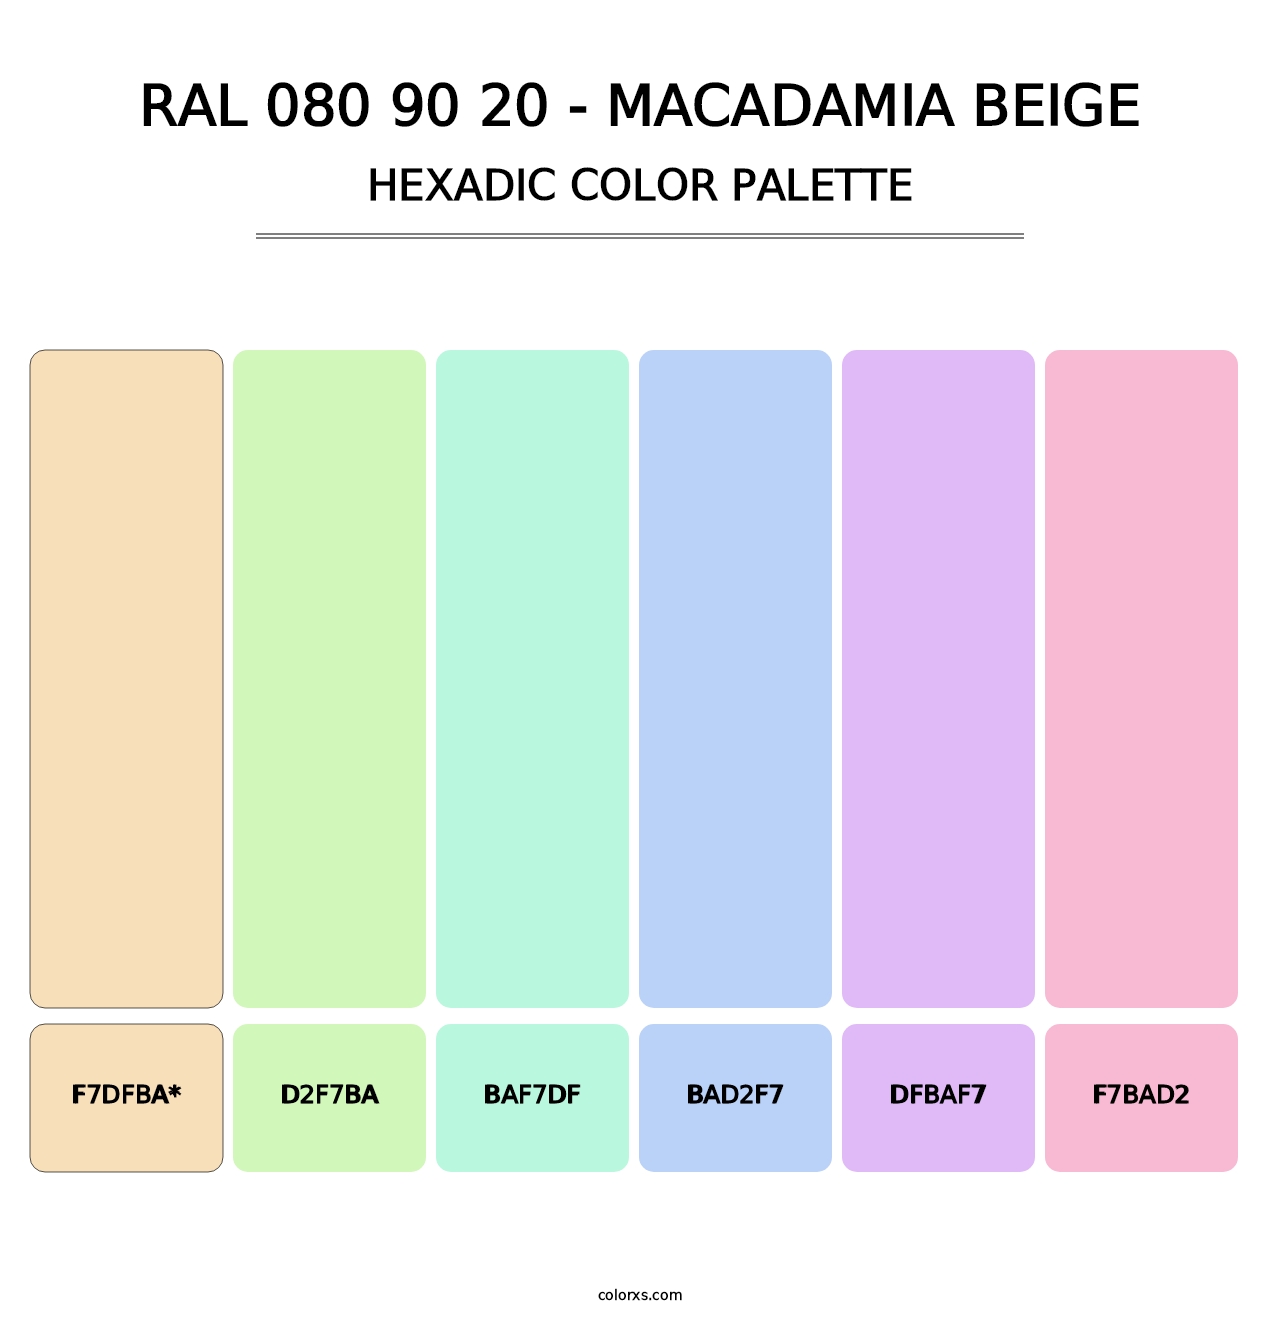 RAL 080 90 20 - Macadamia Beige - Hexadic Color Palette